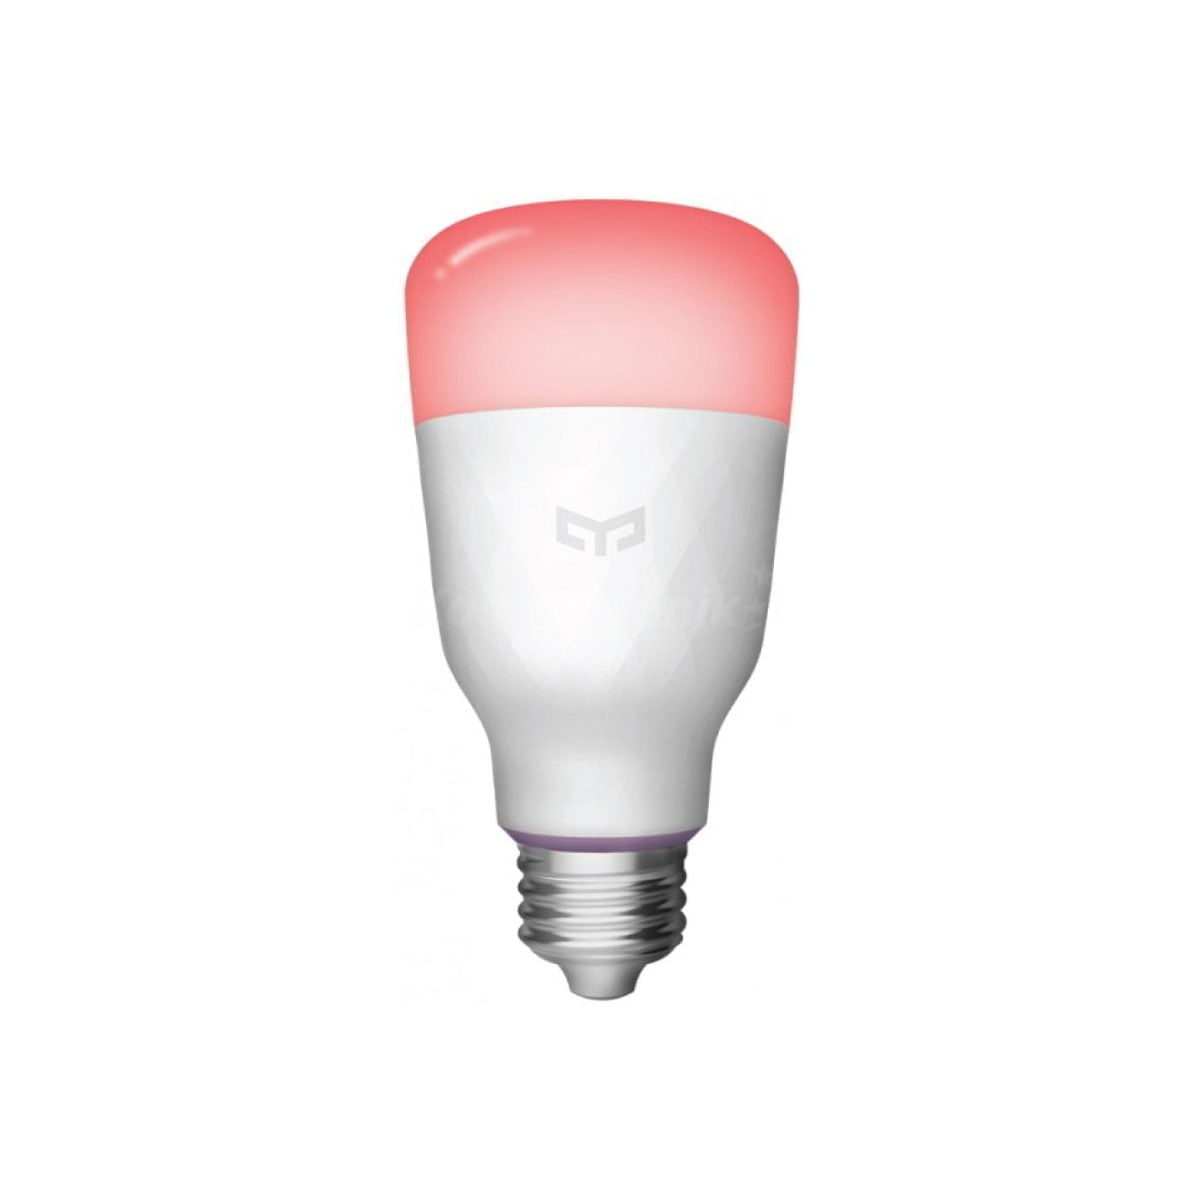 Yldp13Yl 4 1 شاومي سوف تسمح لك لمبة الإضاءة الذكية Yeelight 1S Rgb بإنشاء منزلك الذكي الخاص. يمكنك التحكم فيه بصوتك أو تطبيقك وتحديد درجة الحرارة والقوة التي يجب أن يلمع بها. التدفق الضوئي: 800 لومن درجة حرارة اللون: 1700 K-6500K حامل المصباح: E27 الطاقة المقدرة: 8.5 واط &Nbsp; 16 مليون لون مع تمكين Wifi والتحكم الصوتي والتحكم في التطبيقات ومزامنة الموسيقى &Lt;Img Class=&Quot;Alignnone Wp-Image-8061 Size-Full&Quot; Src=&Quot;Https://Lablaab.com/Wp-Content/Uploads/2020/04/Bulb-27-2-Scaled.jpg&Quot; Alt=&Quot;&Quot; Width=&Quot;2560&Quot; Height=&Quot;357&Quot;&Gt; &Nbsp; لمبة يلايت الذكية 1S (ألوان)